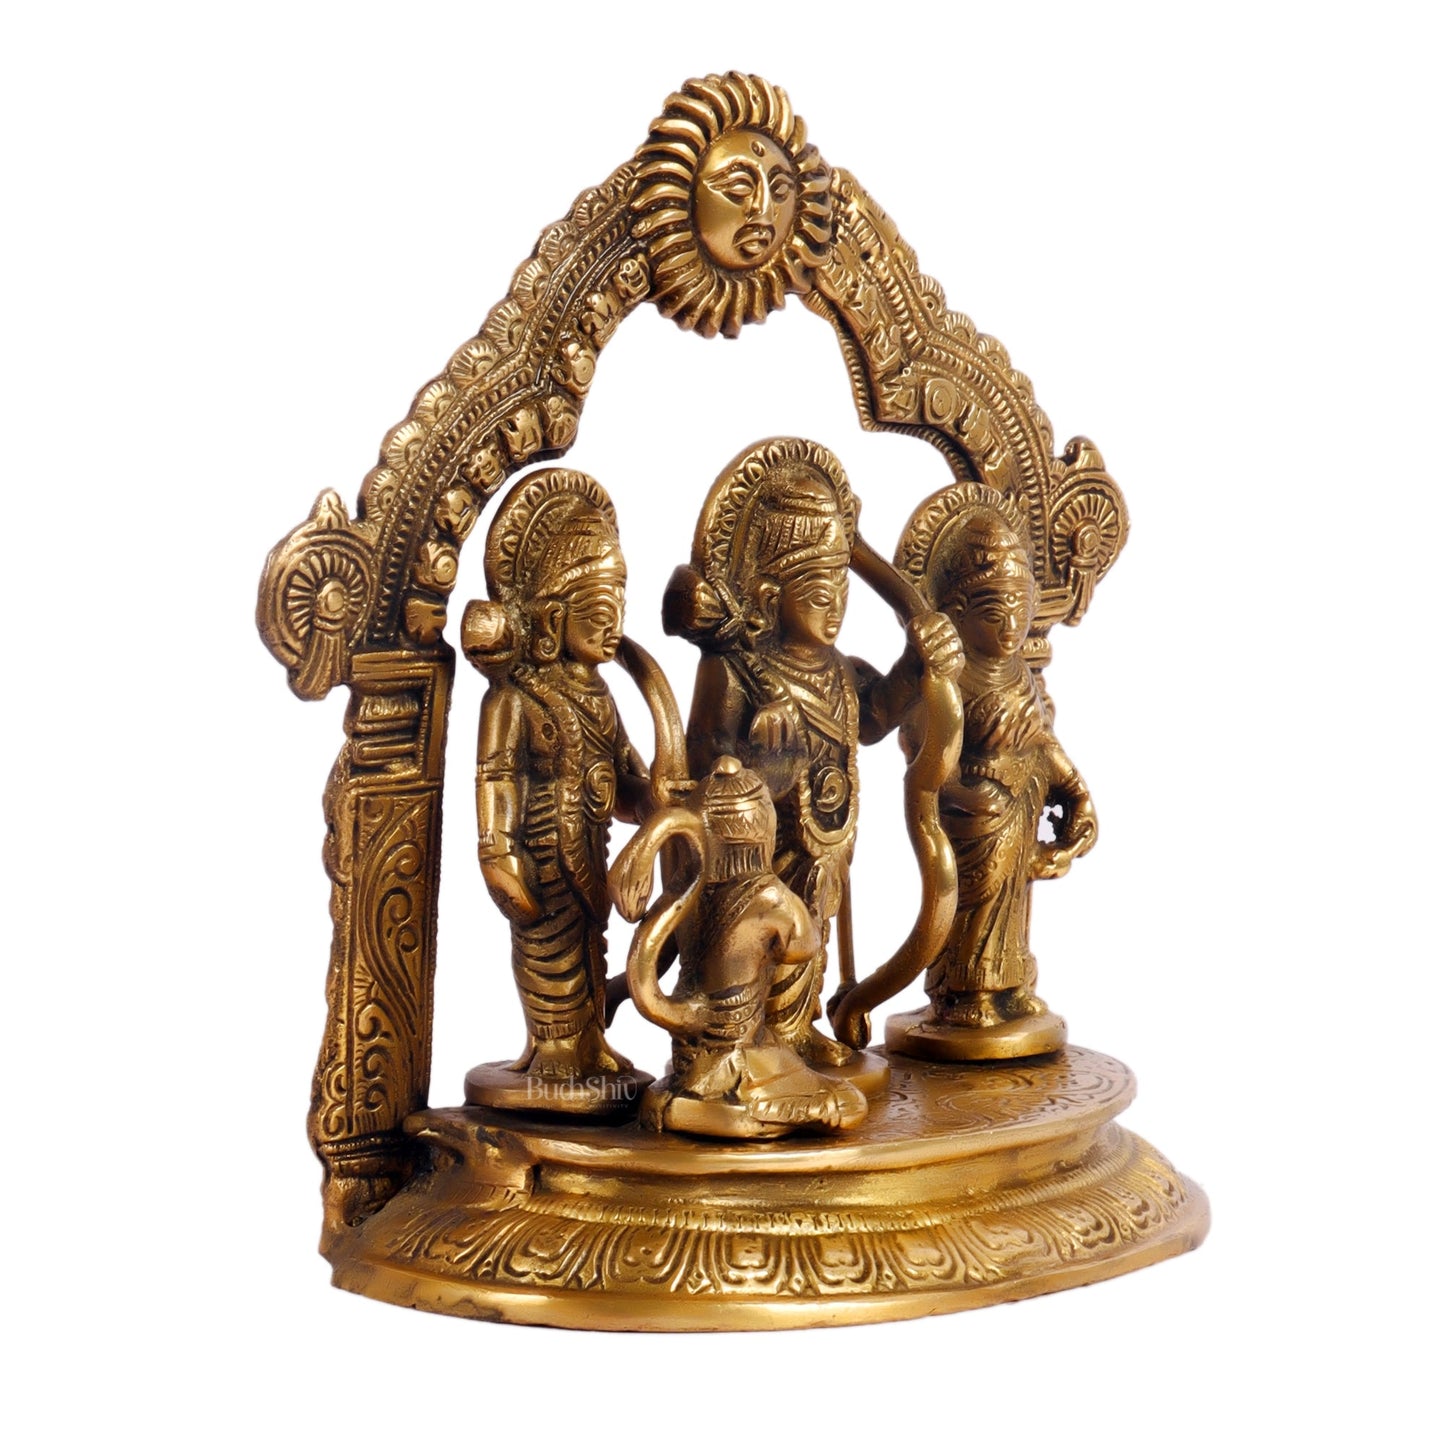 Divine Brass Ram Darbar 7.5 inch - Budhshiv.com